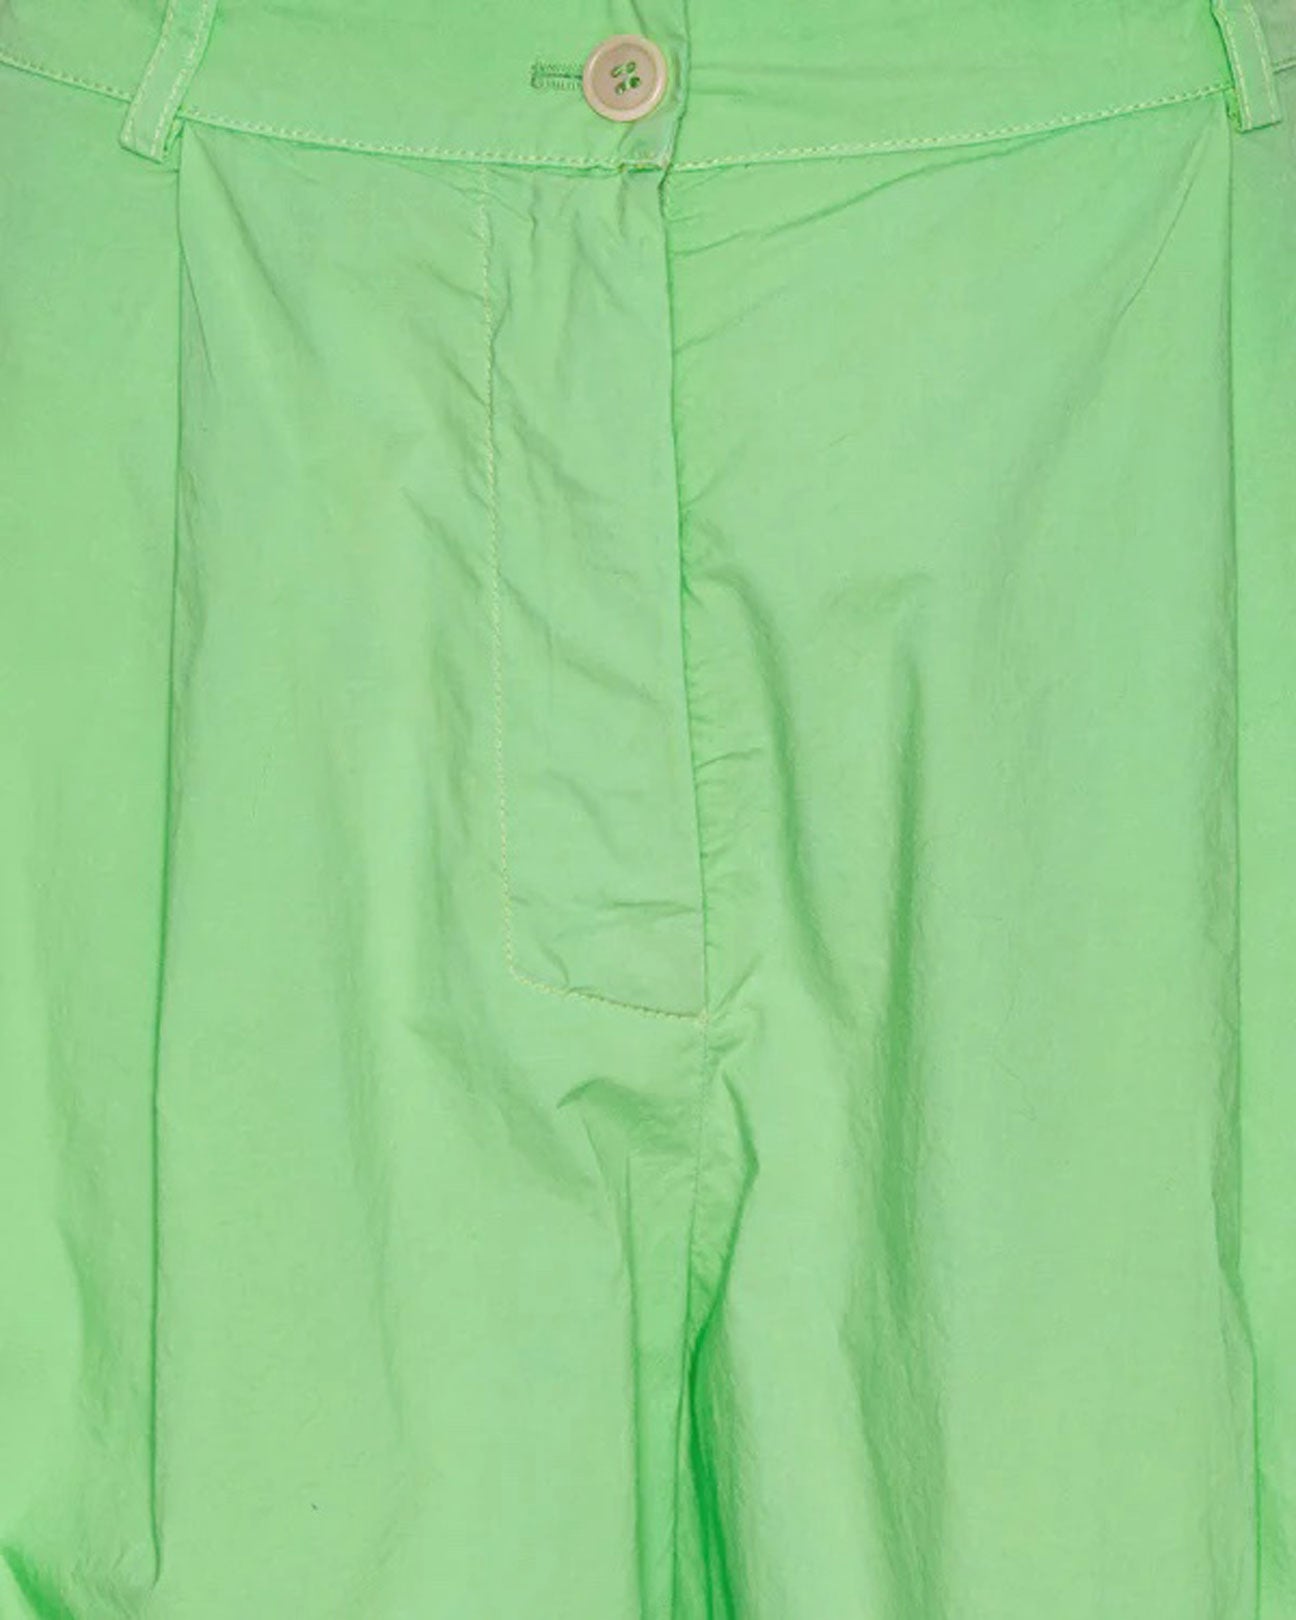 HENRIK VIBSKOV Siesta Pants in Summer Green available at Lahn.shop